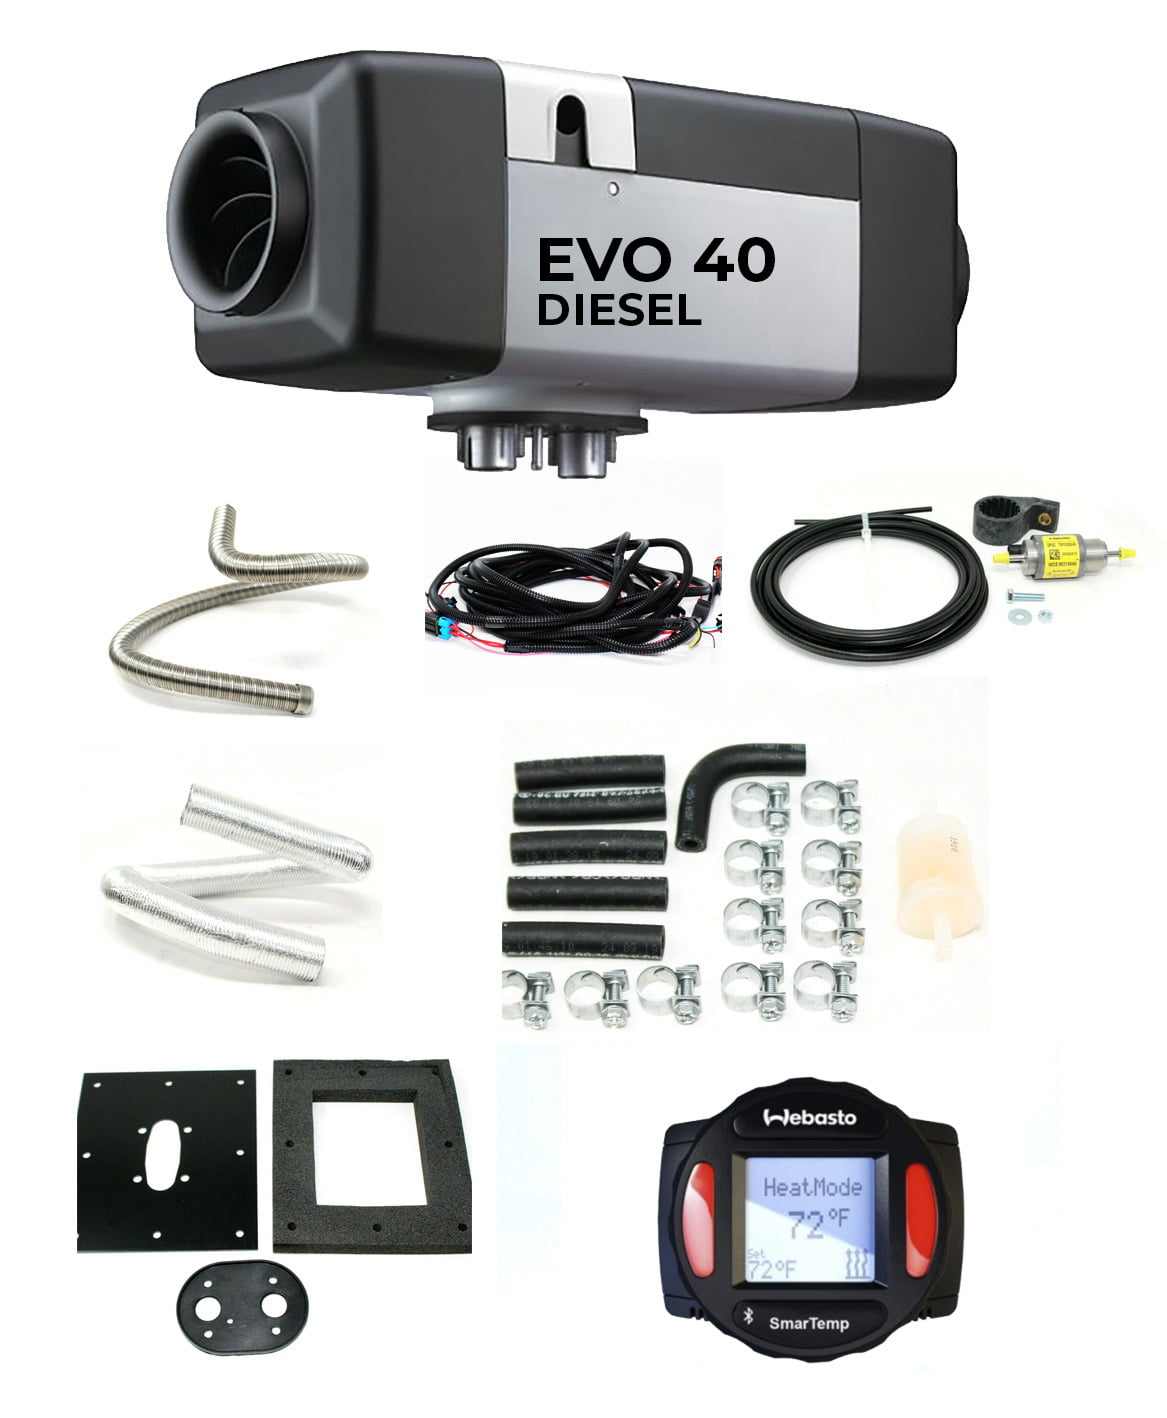 Webasto Air Top EVO 40 4kW Diesel Air Heater RV Vehicle Kit 12v Furnace